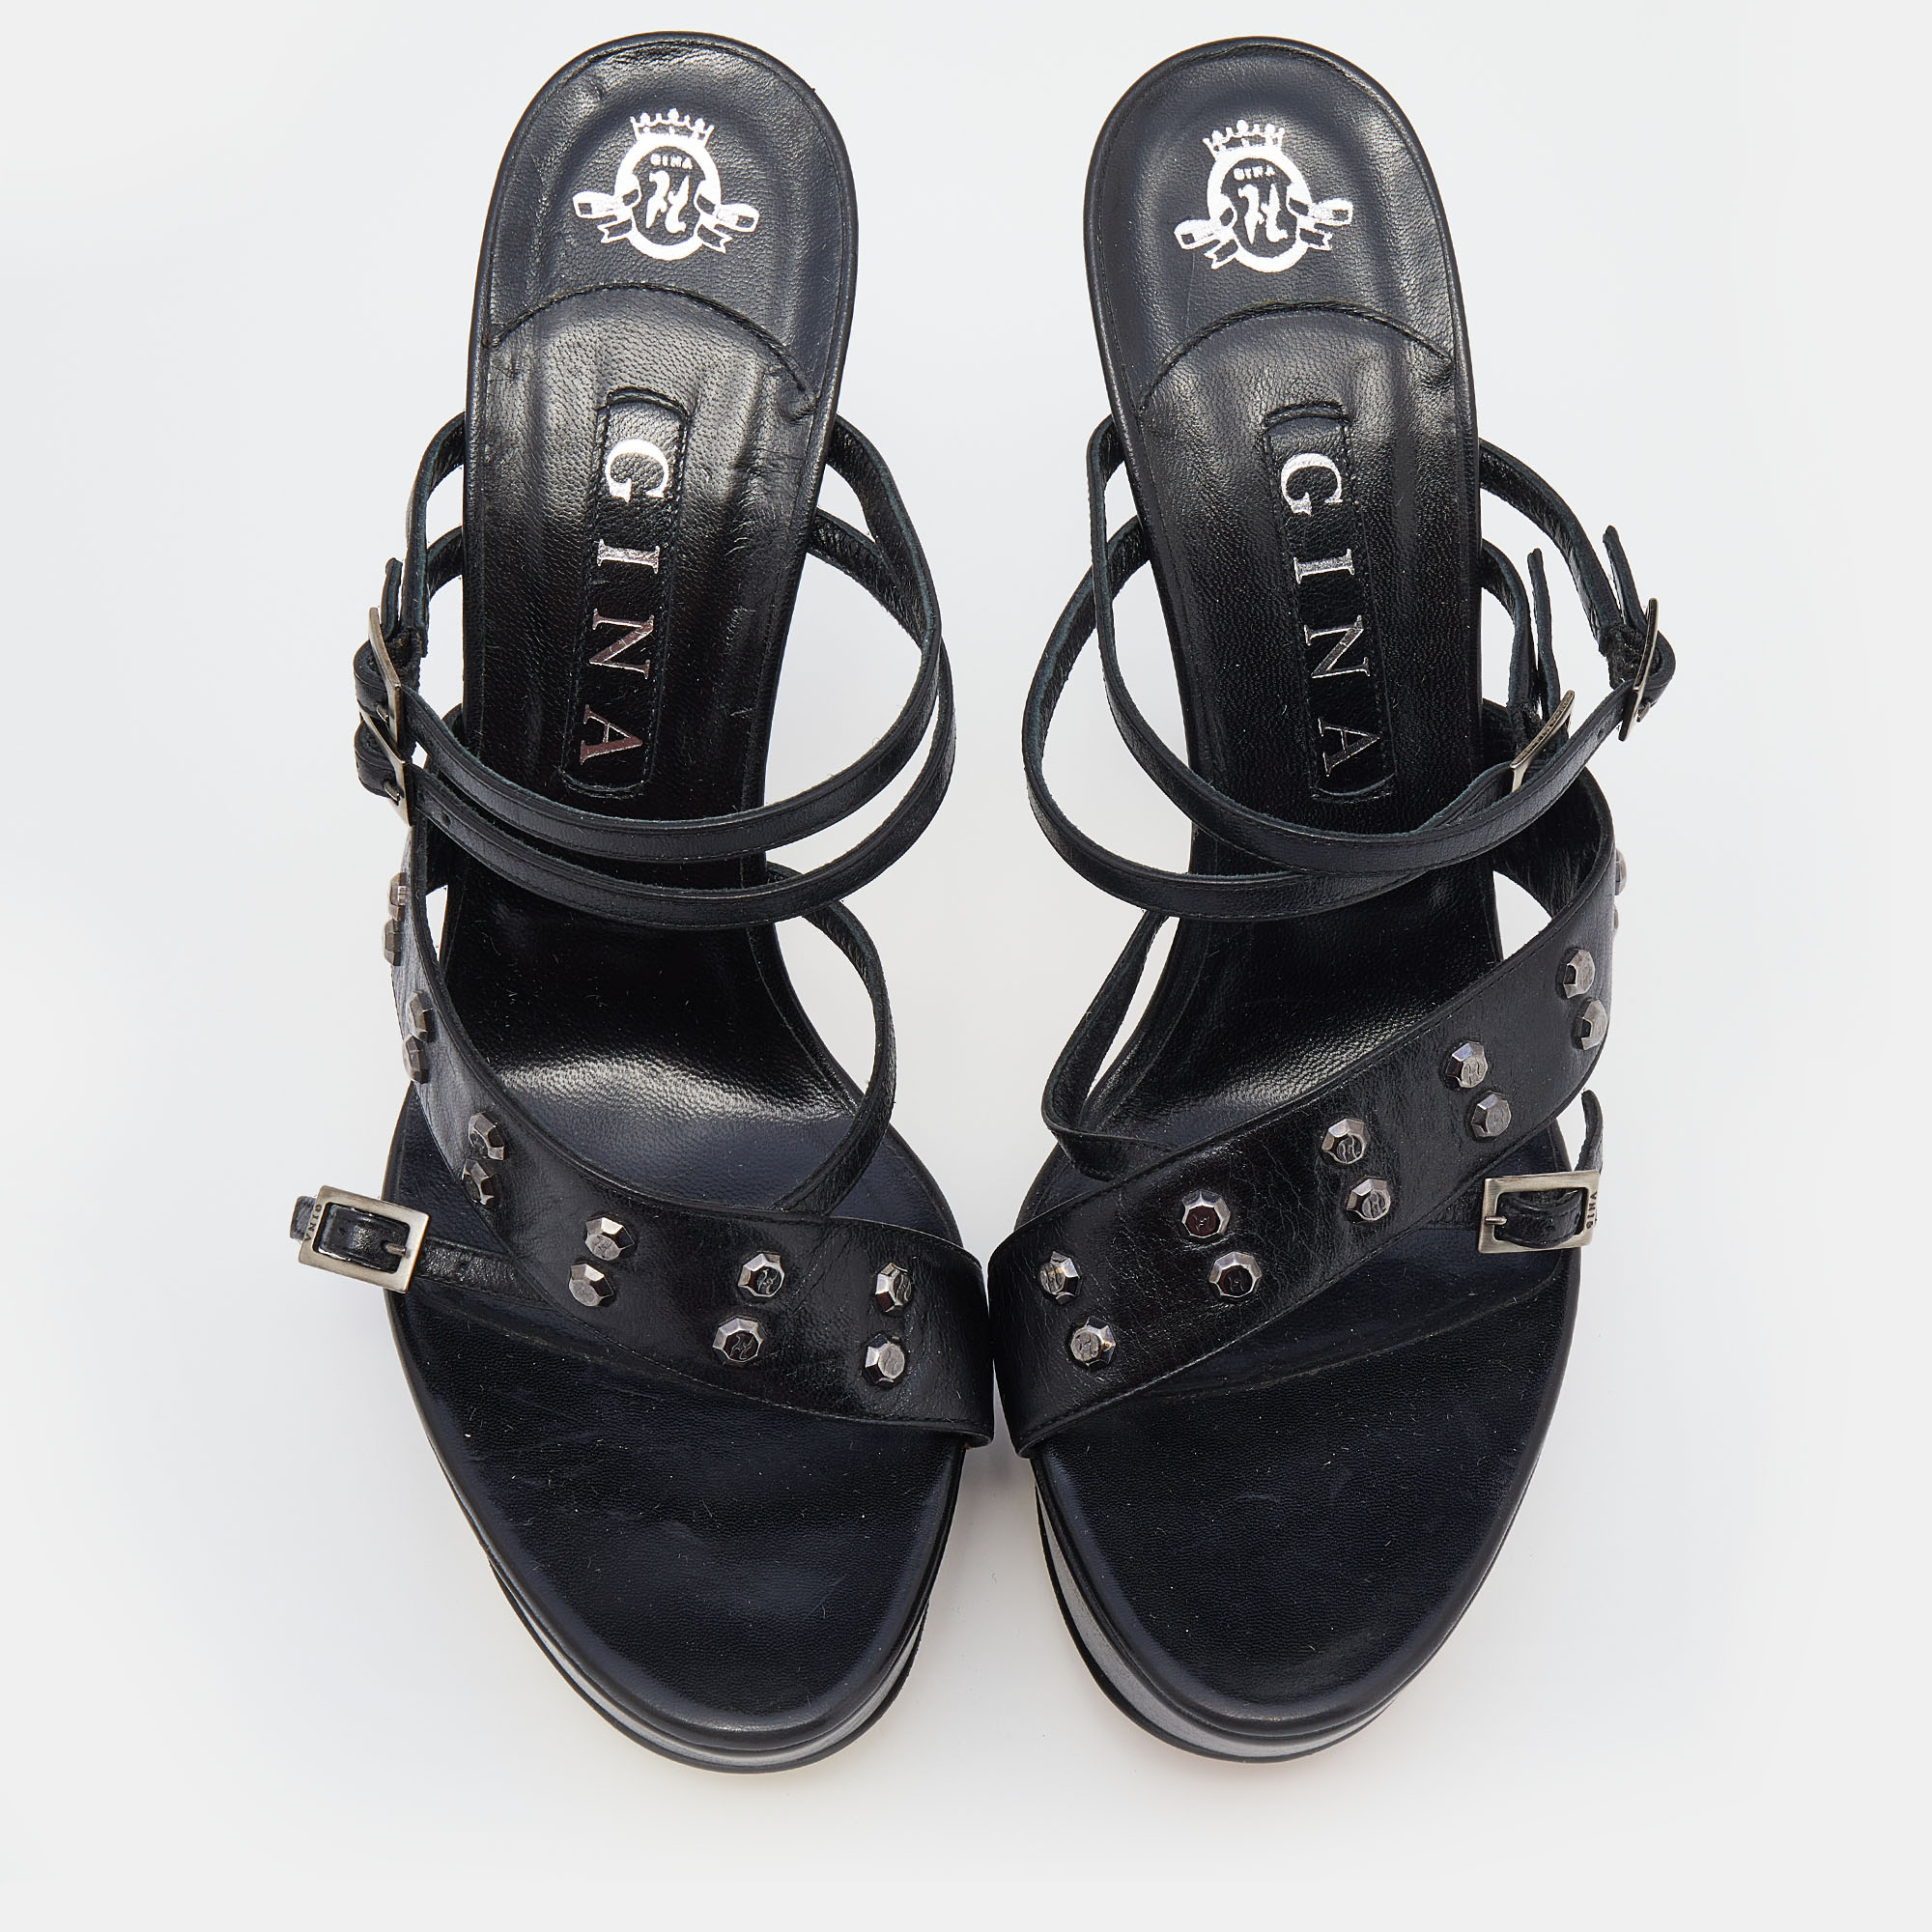 Gina Black Leather Strappy Platform Sandals Size 40.5